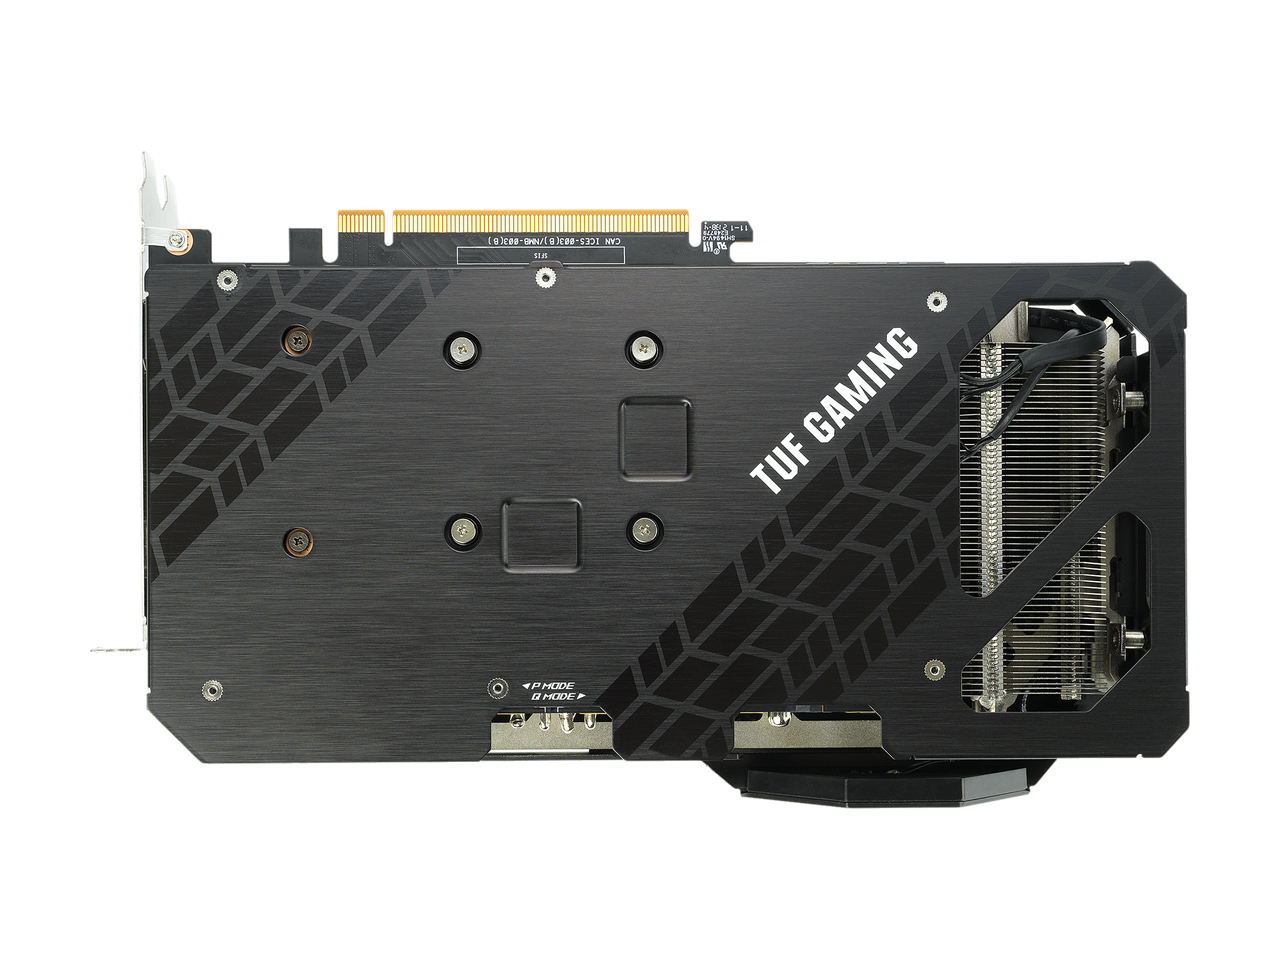 ASUS TUF Gaming Radeon RX 6500 XT 4GB GDDR6 PCI Express 4.0 CrossFireX Support Video Card TUF-RX6500XT-O4G-GAMING